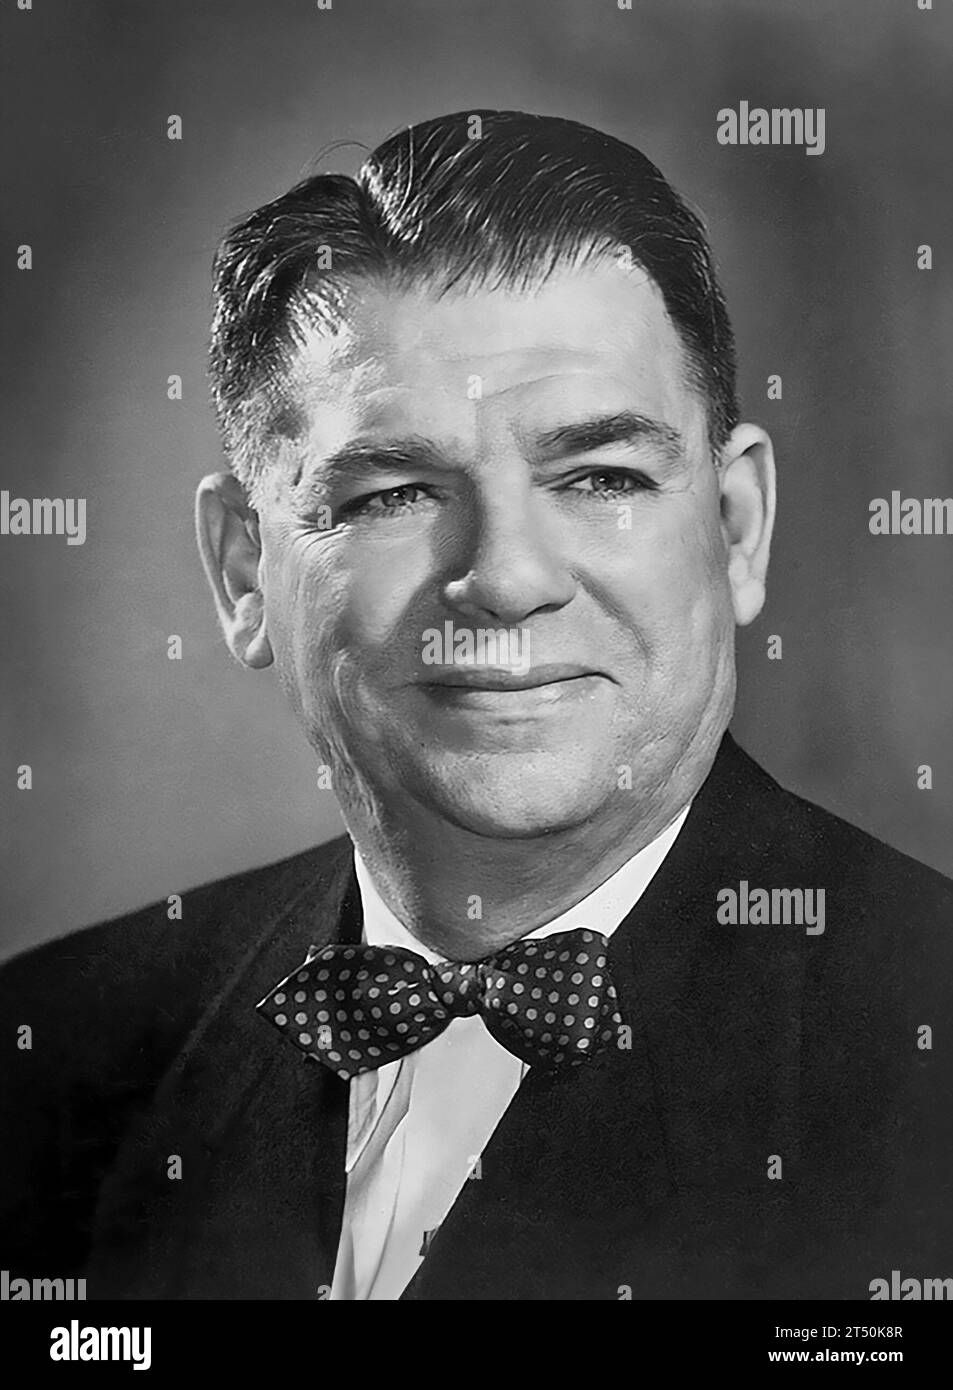 Oscar Hammerstein. Portrait of the American lyricist and theatrical producer, Oscar Greeley Clendenning Hammerstein II (1895-1960), c. 1940 Stock Photo